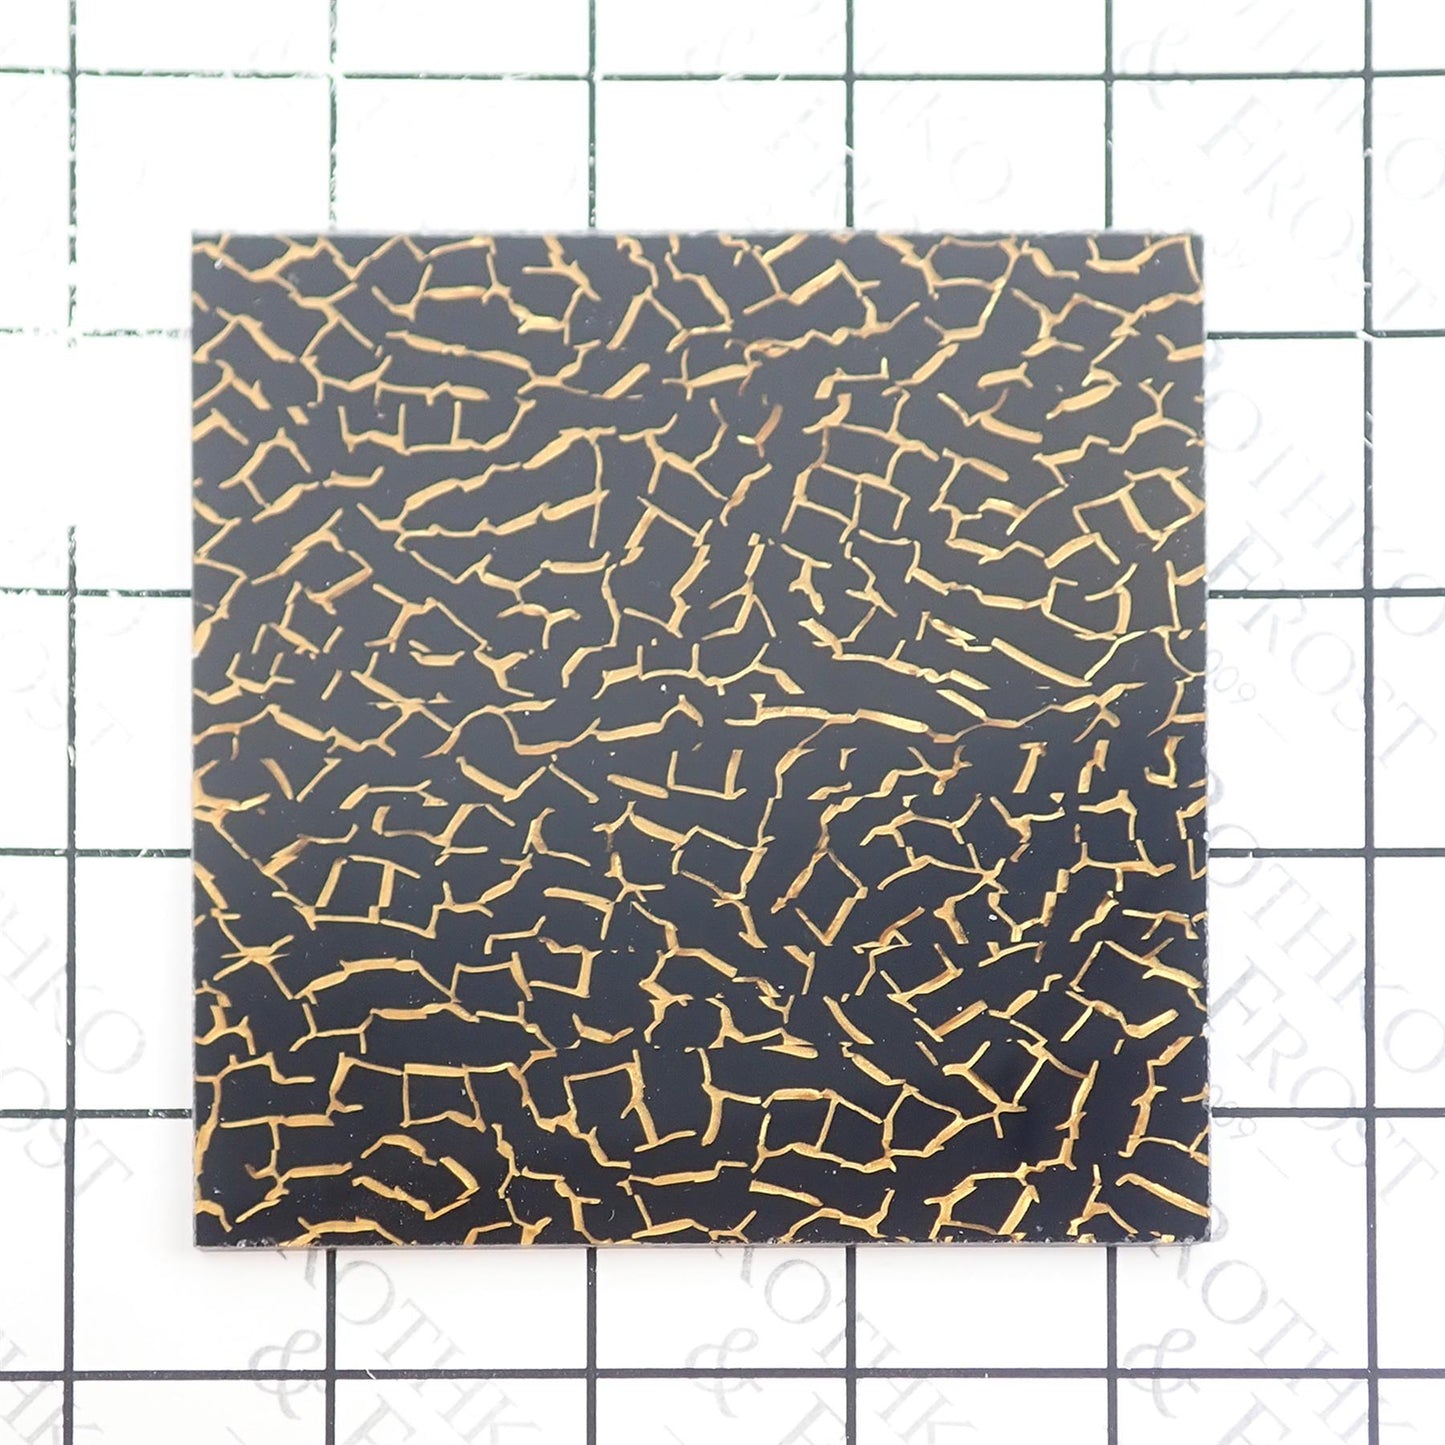 Incudo Black Crackle Celluloid Laminate Acrylic Sheet - 150x125x3mm